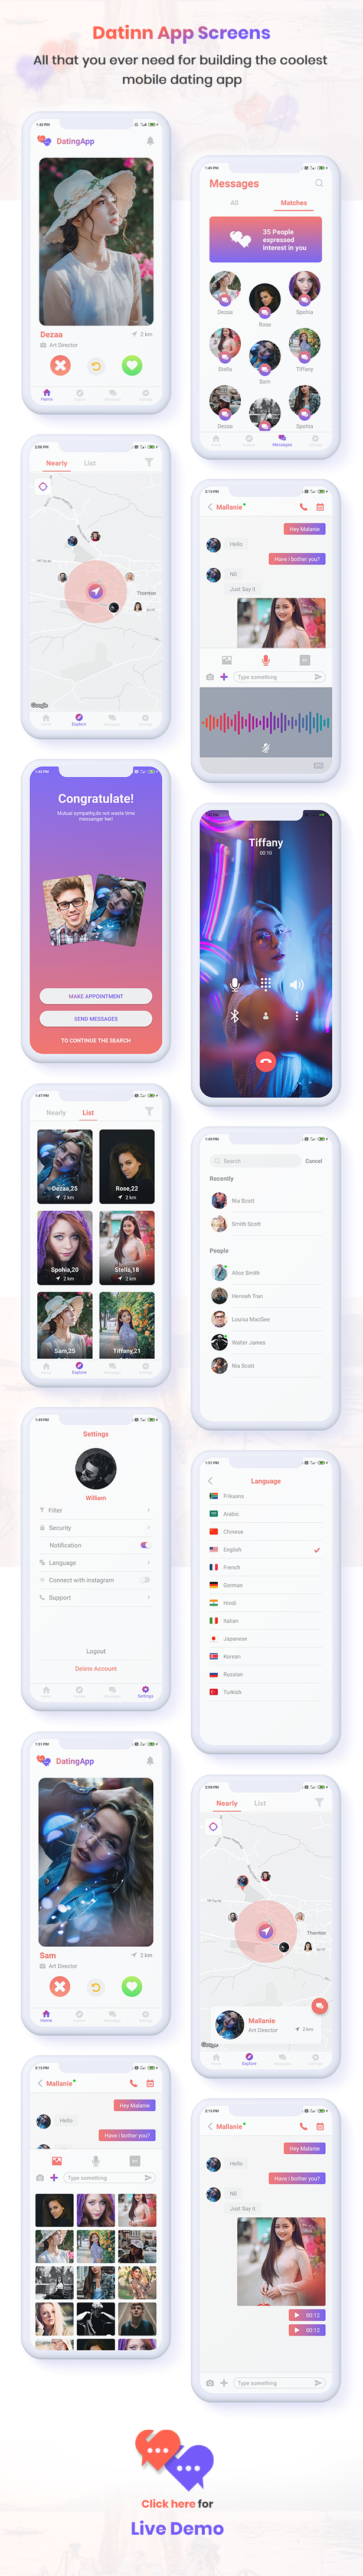 Datinn - Android Dating App UI Design Template Kit - 3